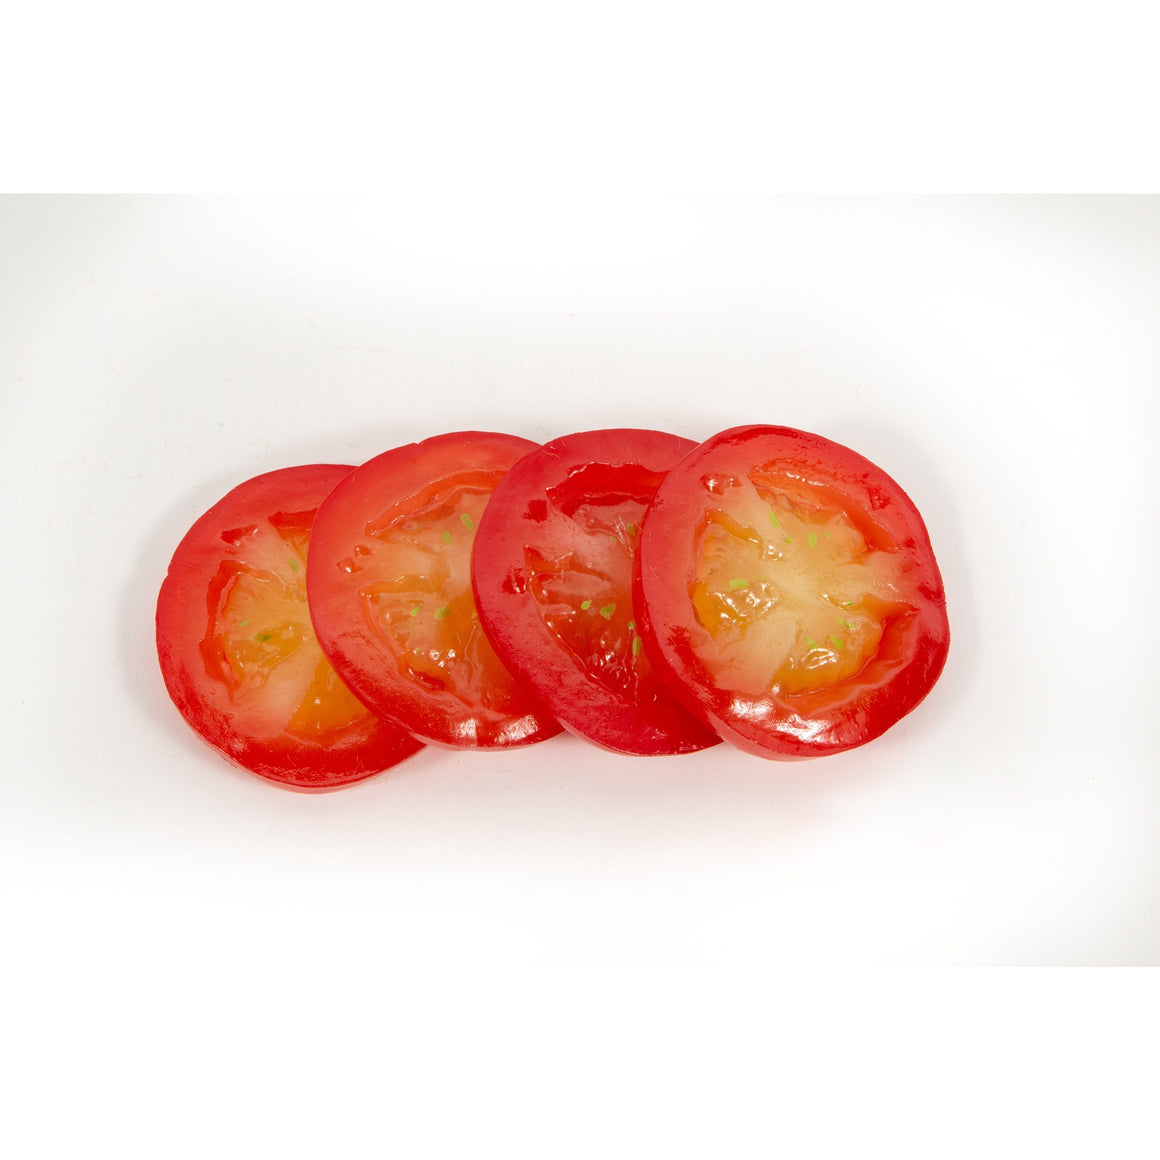 Tomato Slices (Set of 4)